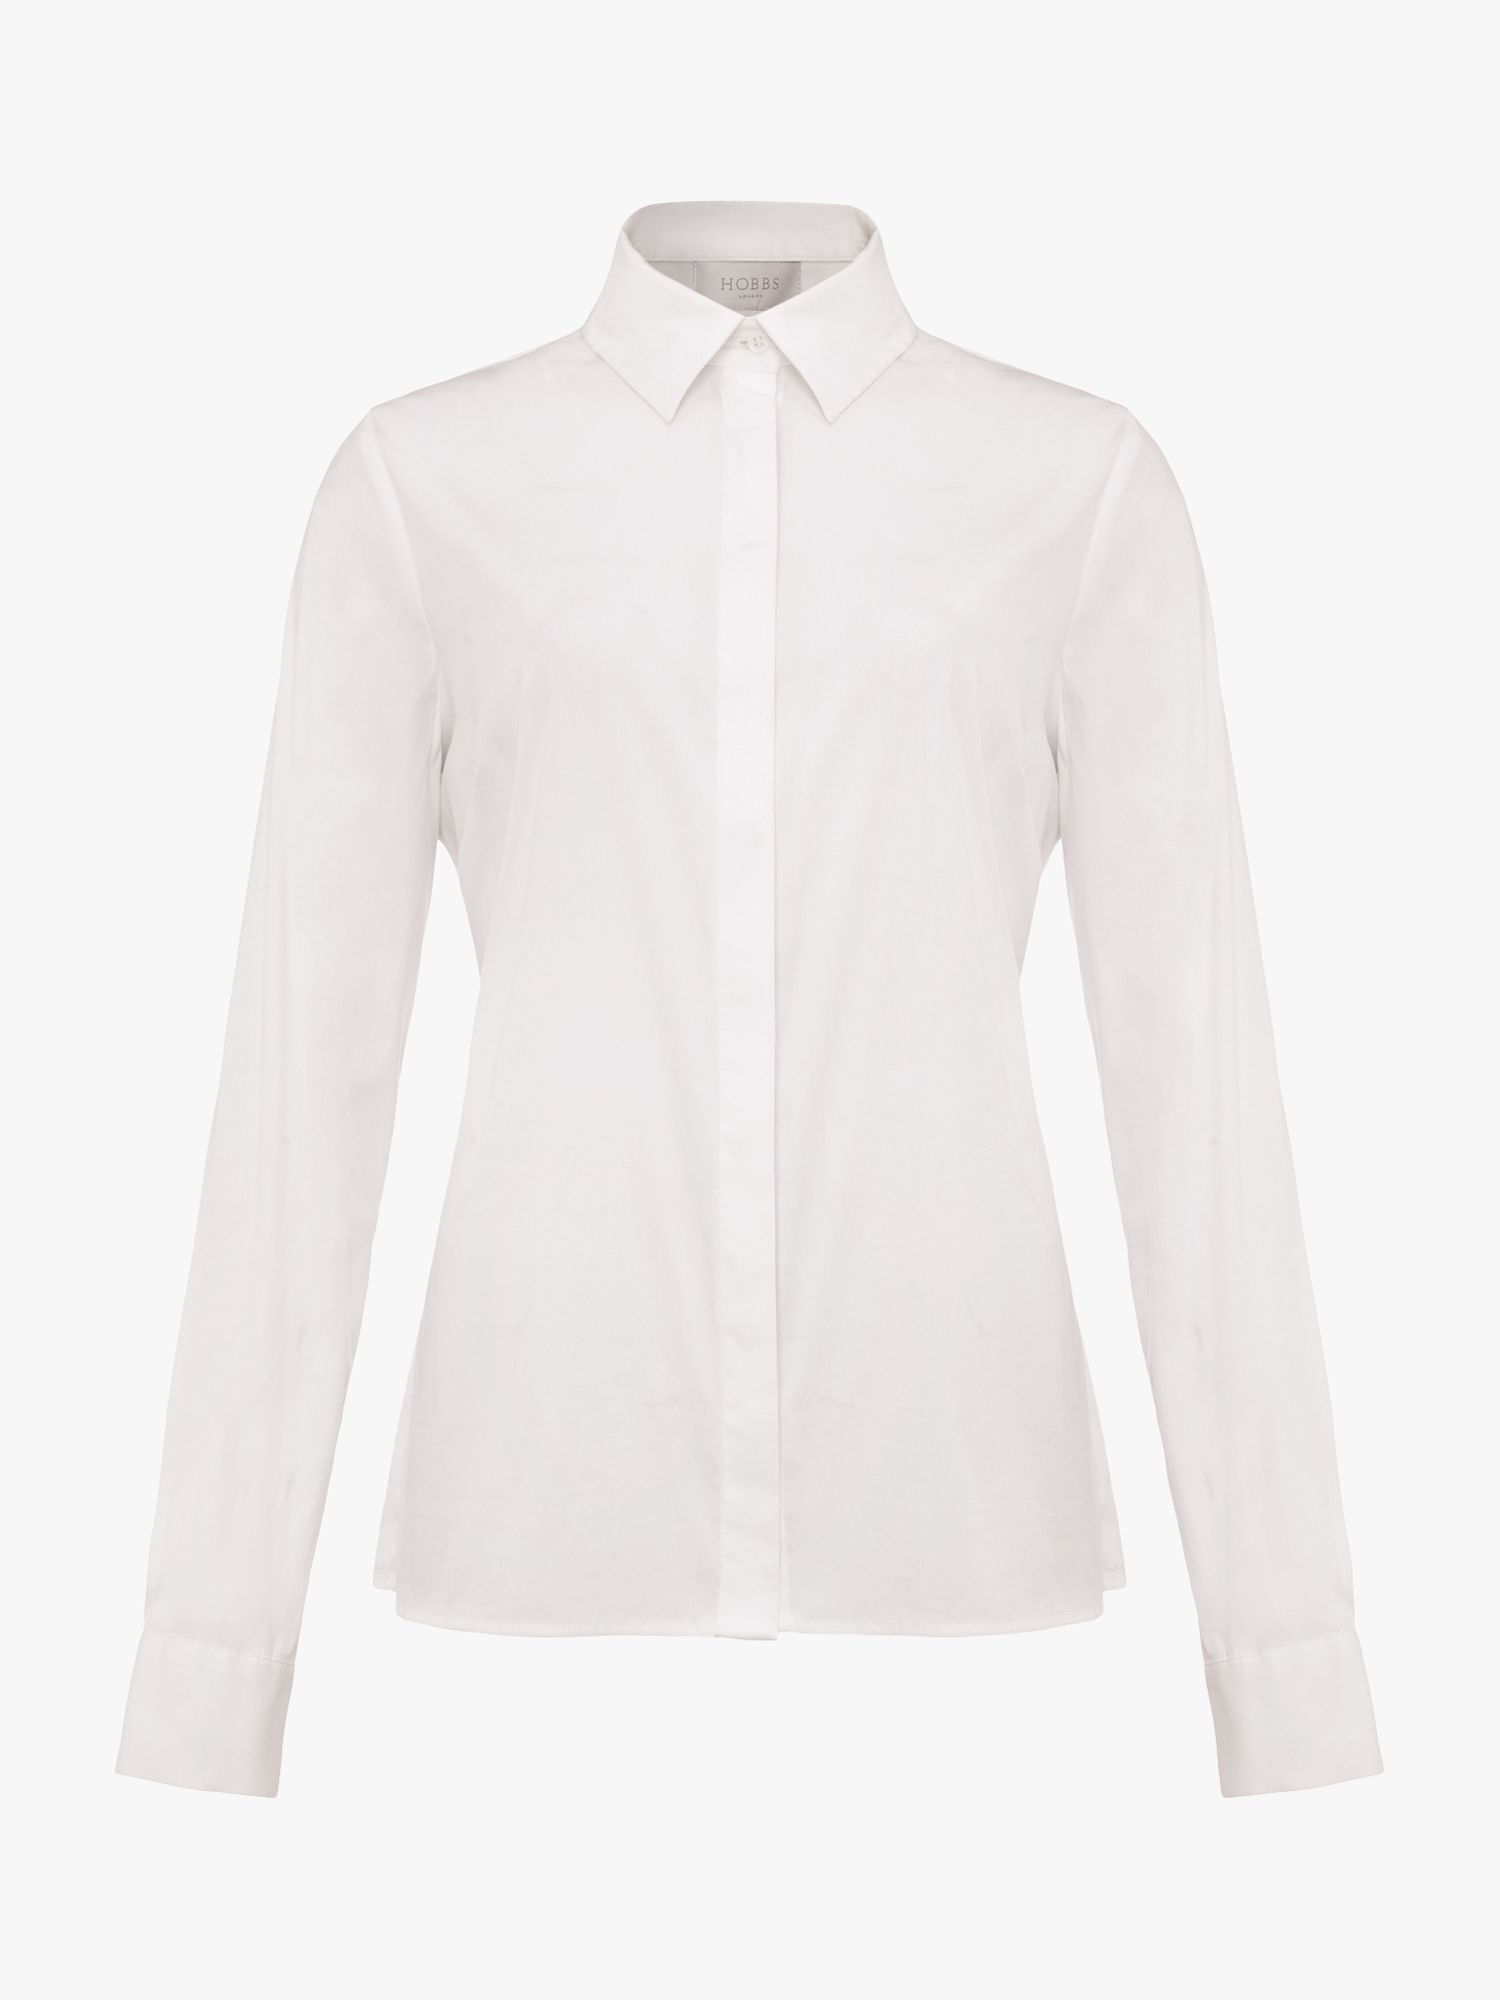 Hobbs Victoria Long Sleeve Shirt, White at John Lewis & Partners